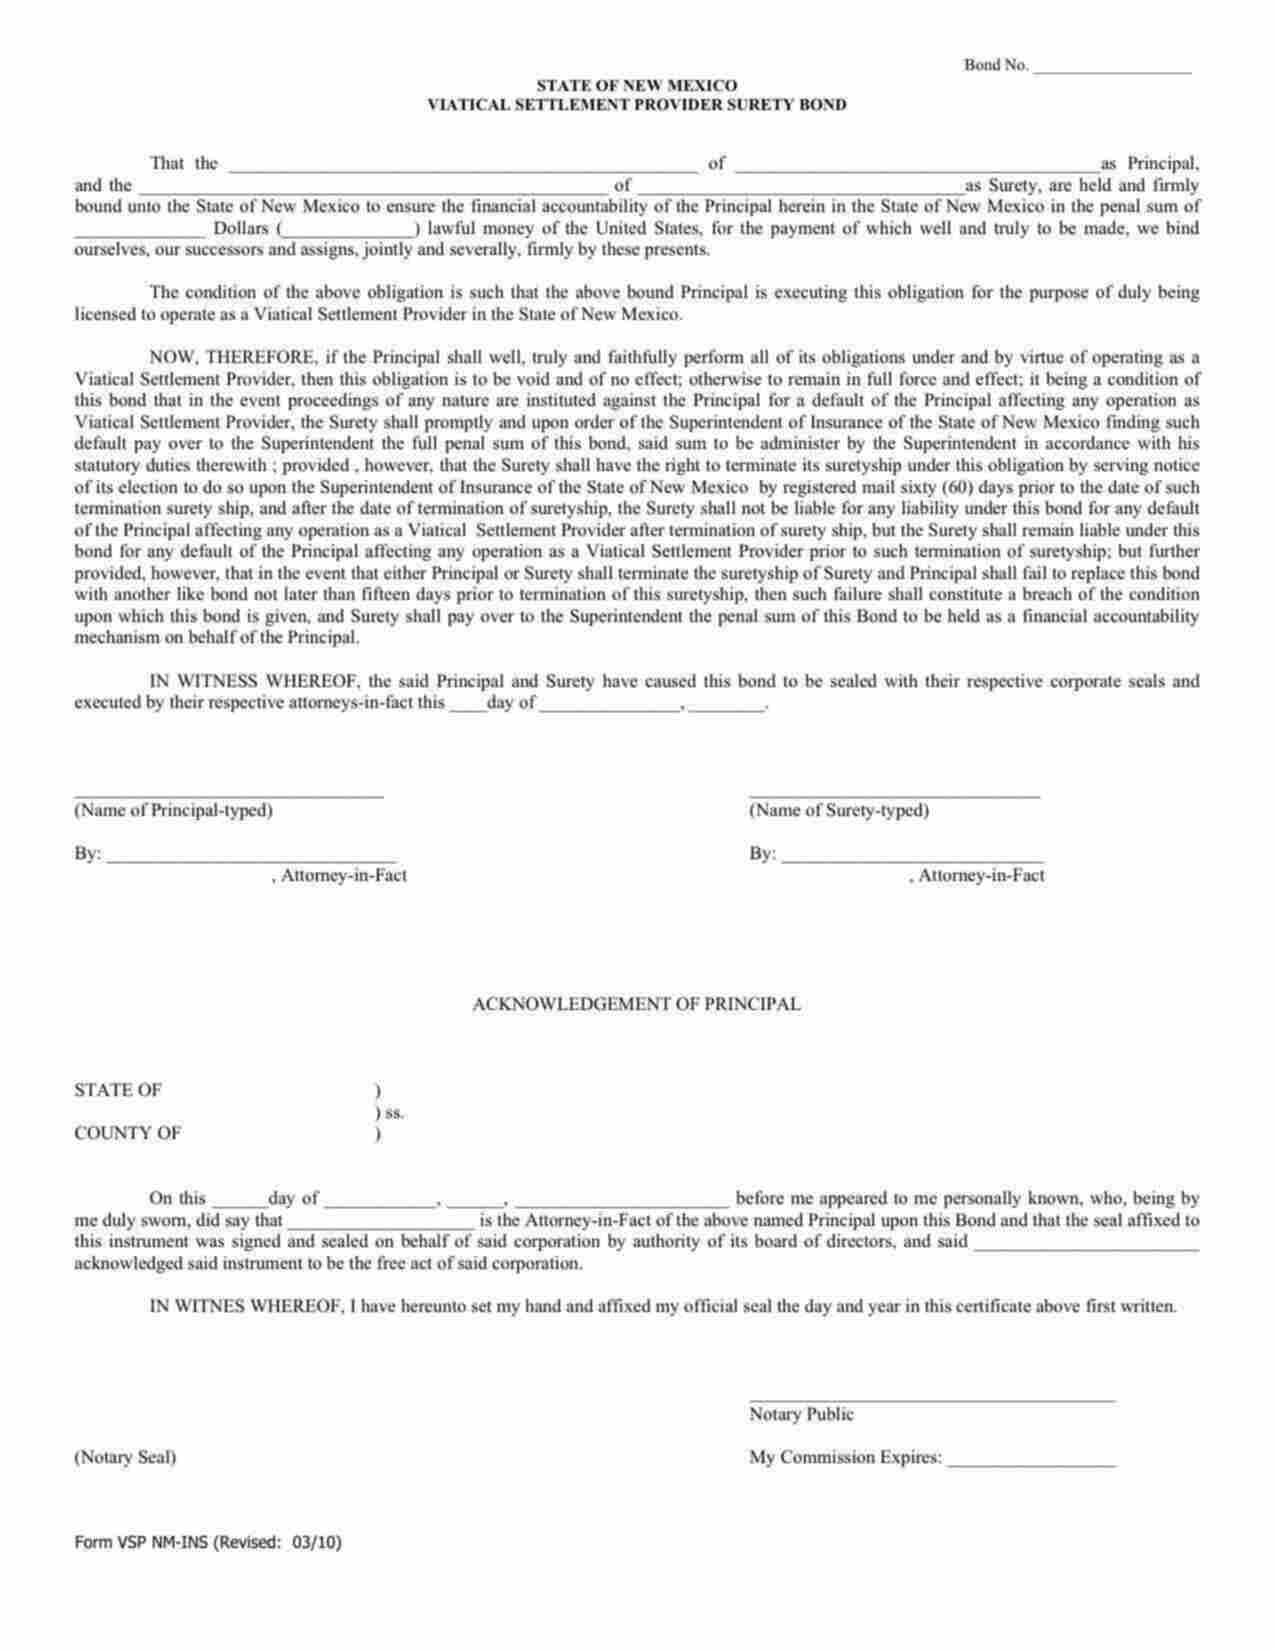 New Mexico Viatical Settlement Provider Bond Form